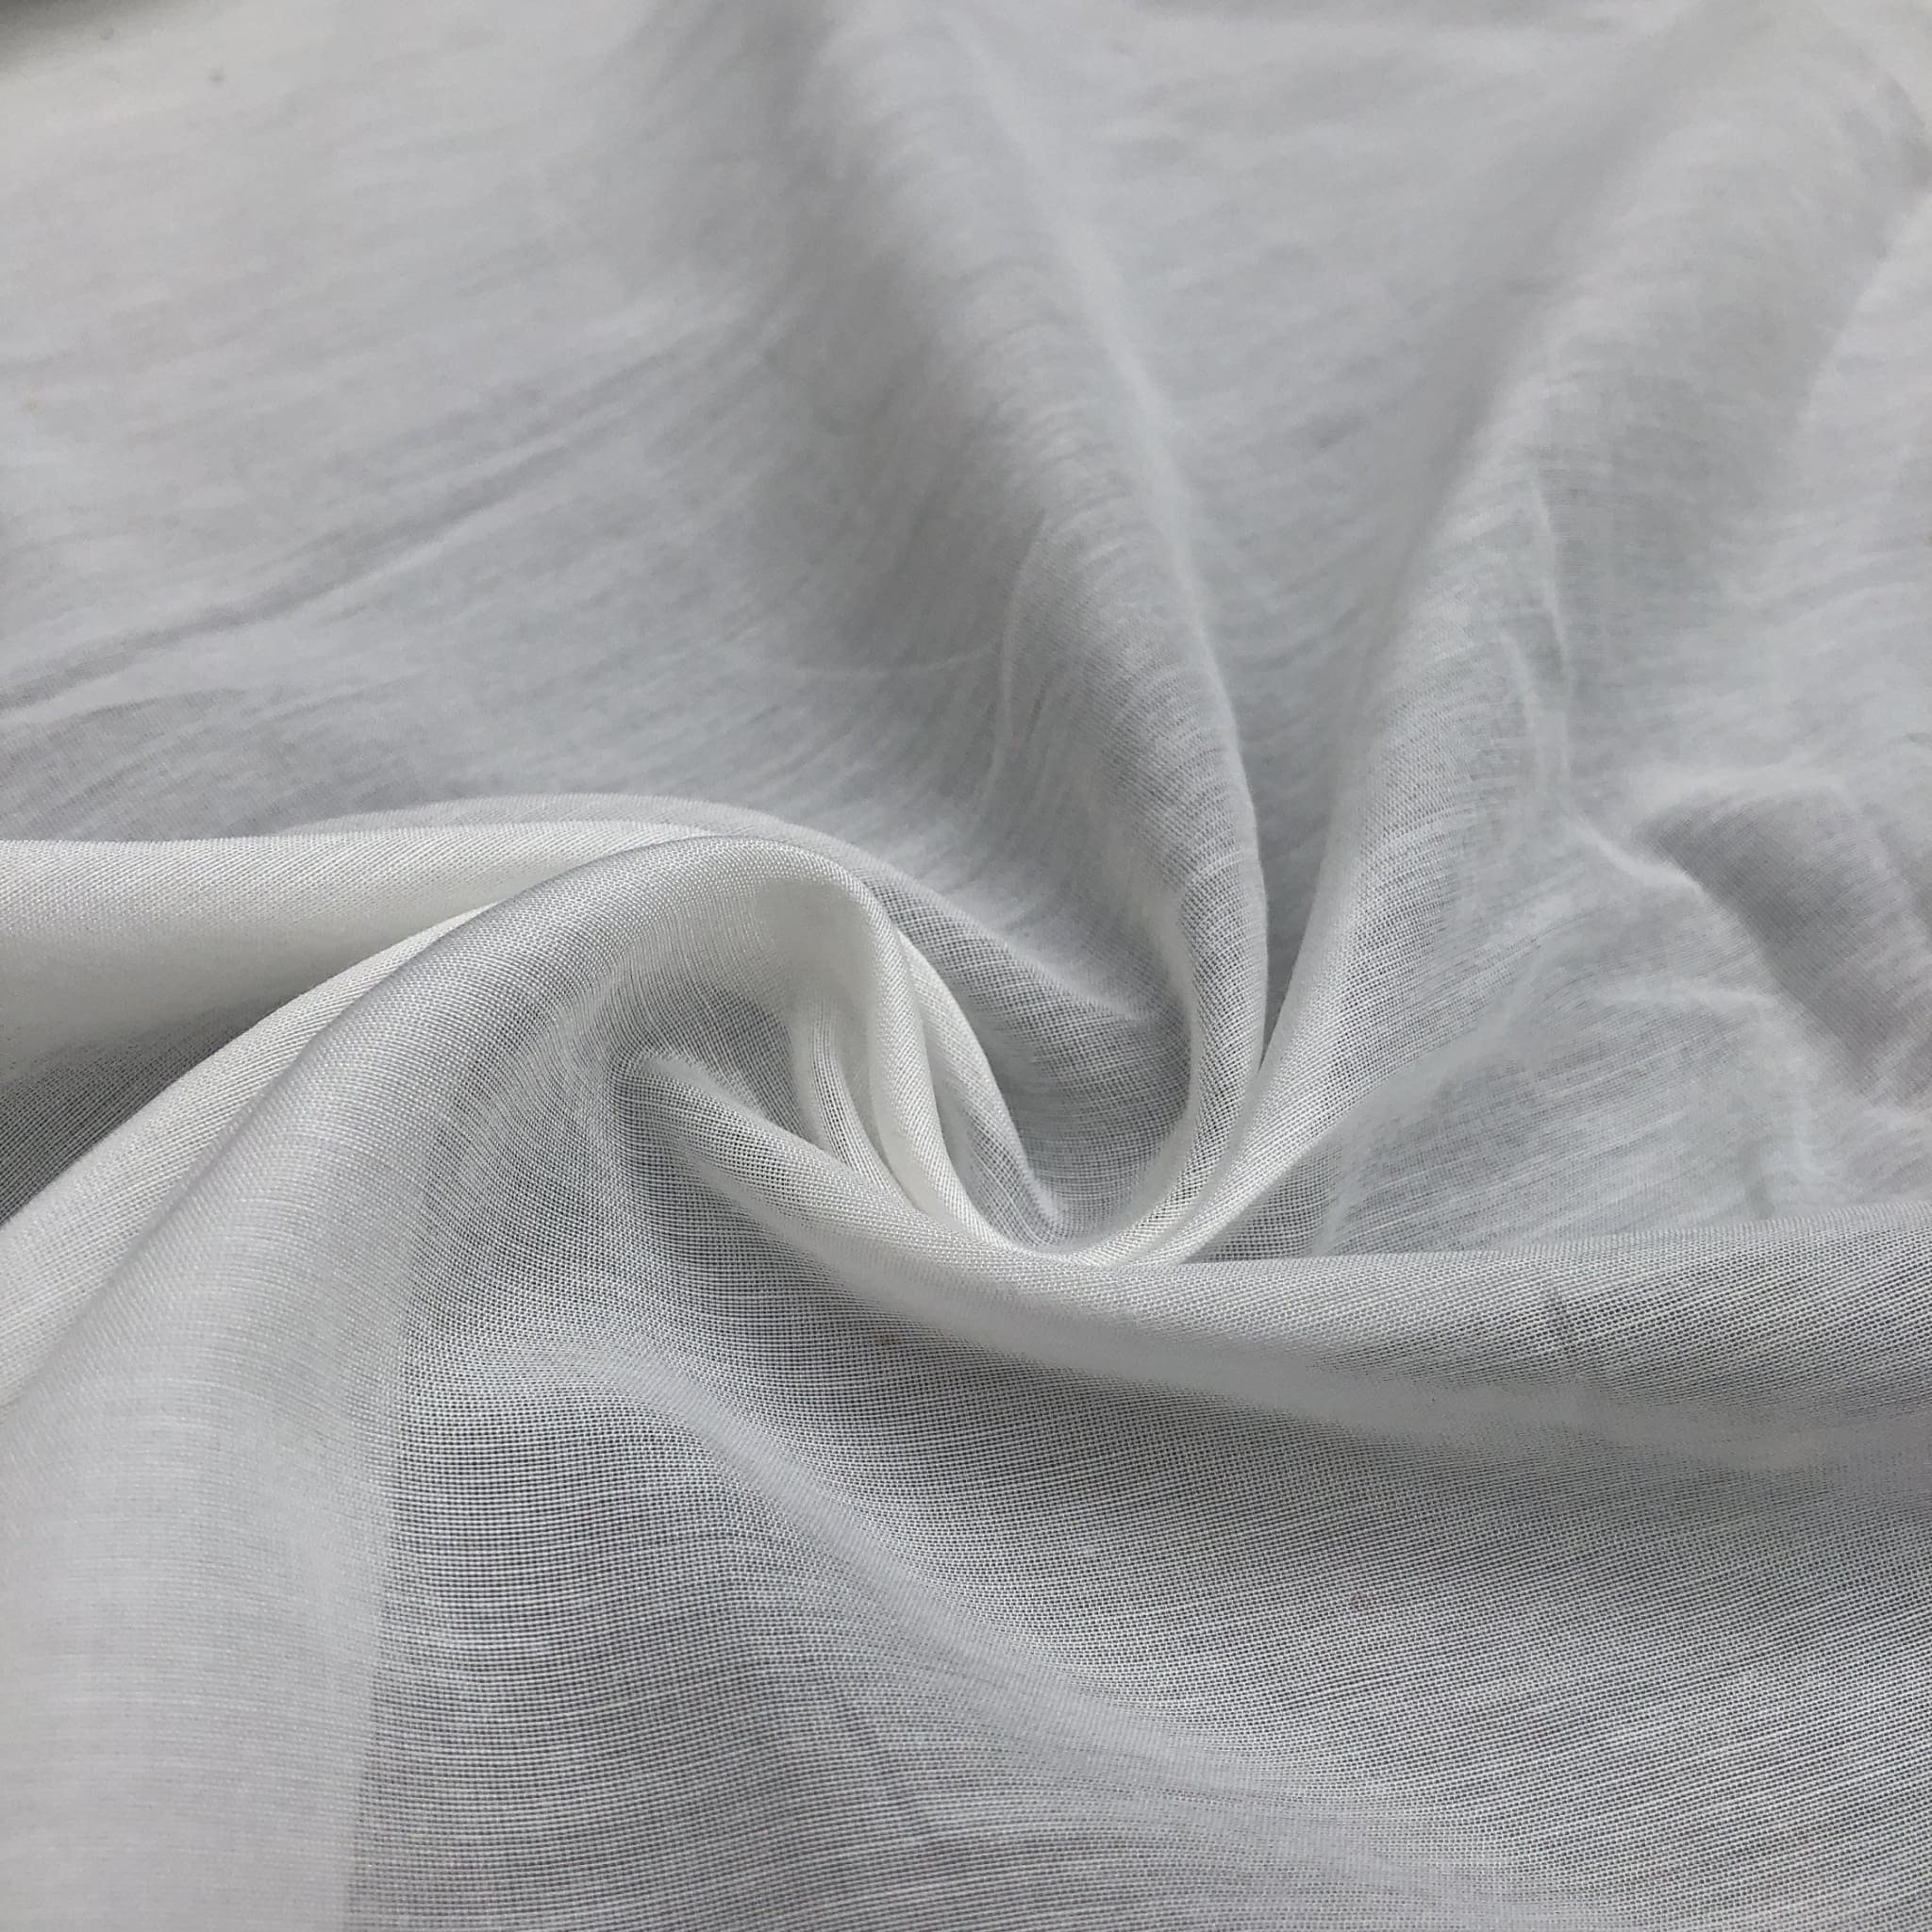 White Chiffon Fabric by the Yard Sheer Fabric Light Weight White